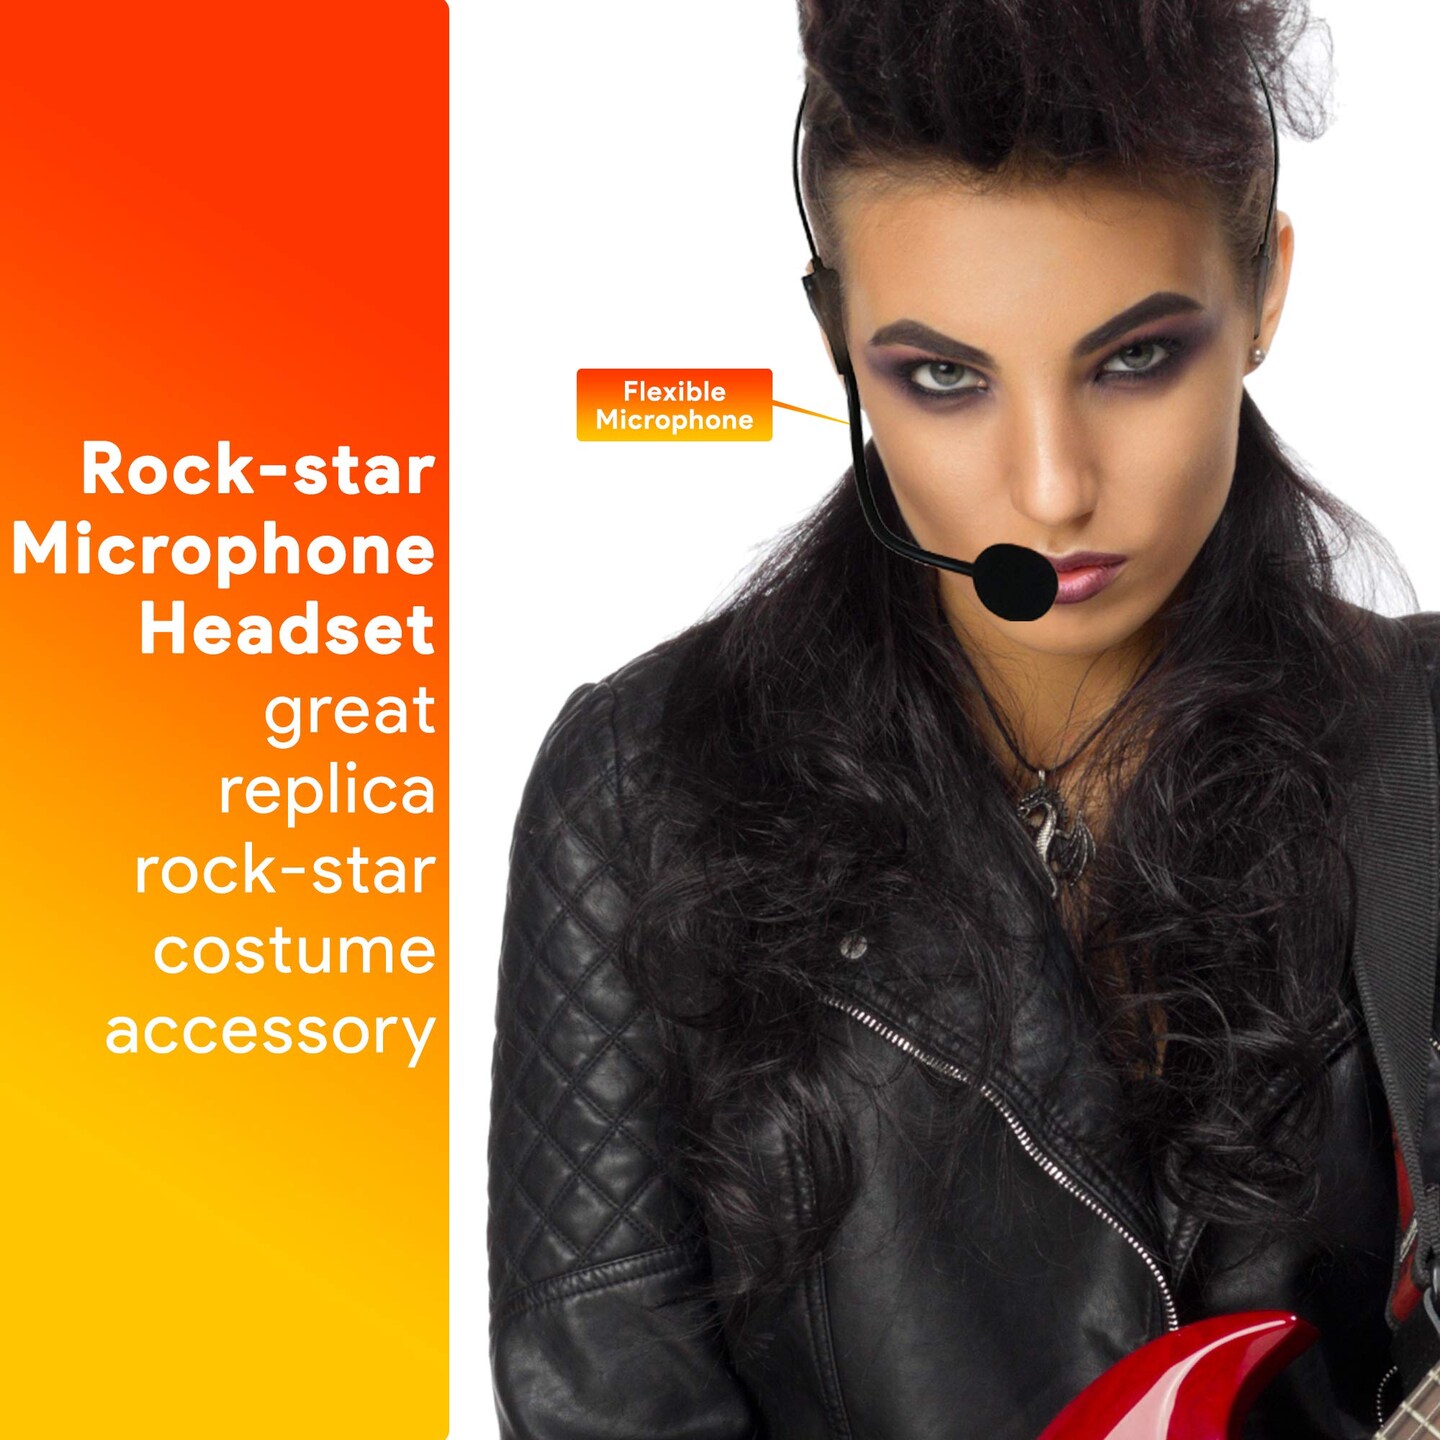 Rockstar Costume Accessories Headset - Fake Rock Star MJ Singer ...